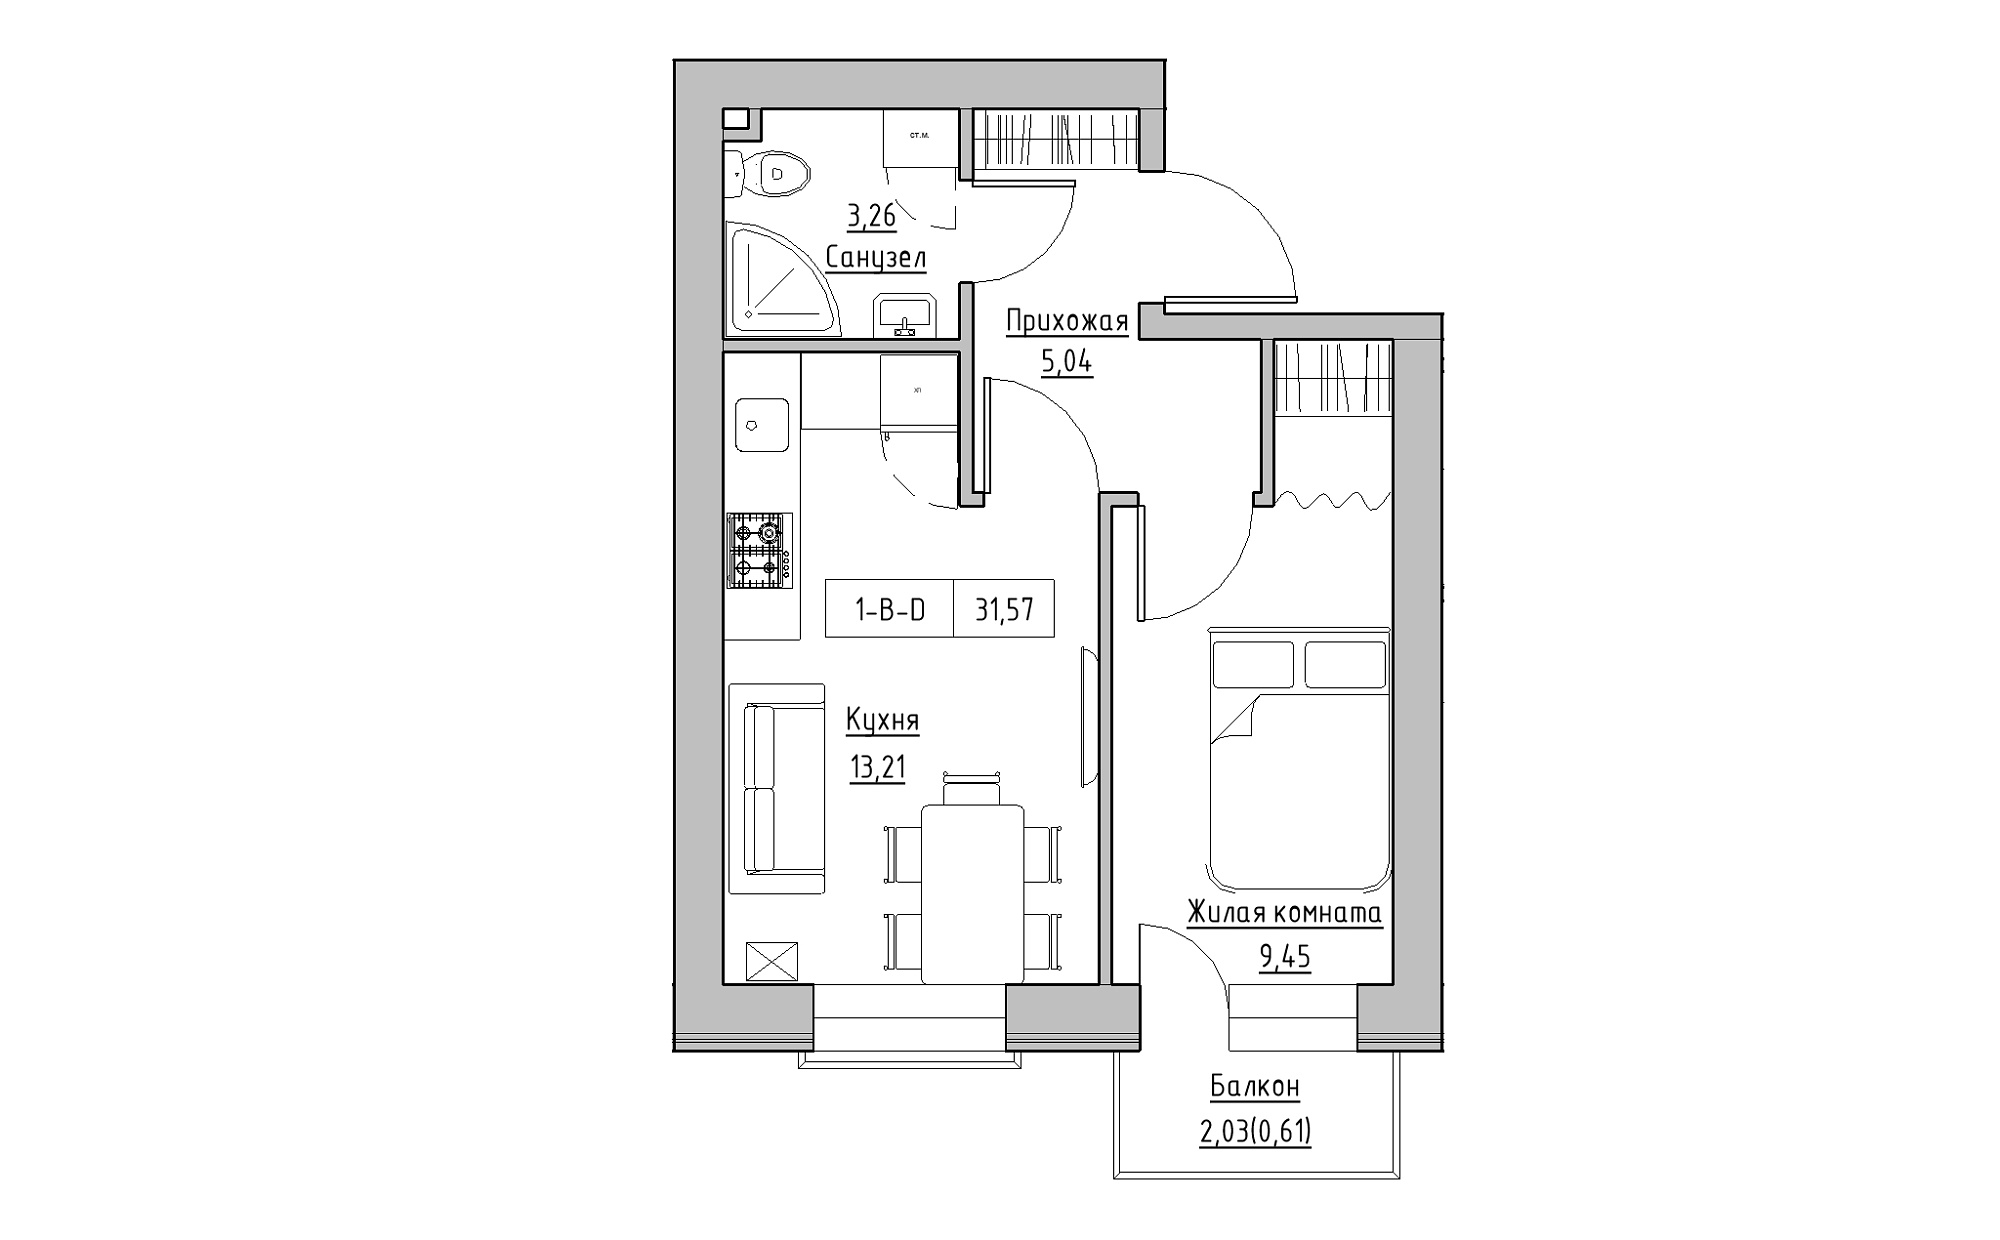 Planning 1-rm flats area 31.57m2, KS-022-02/0003.